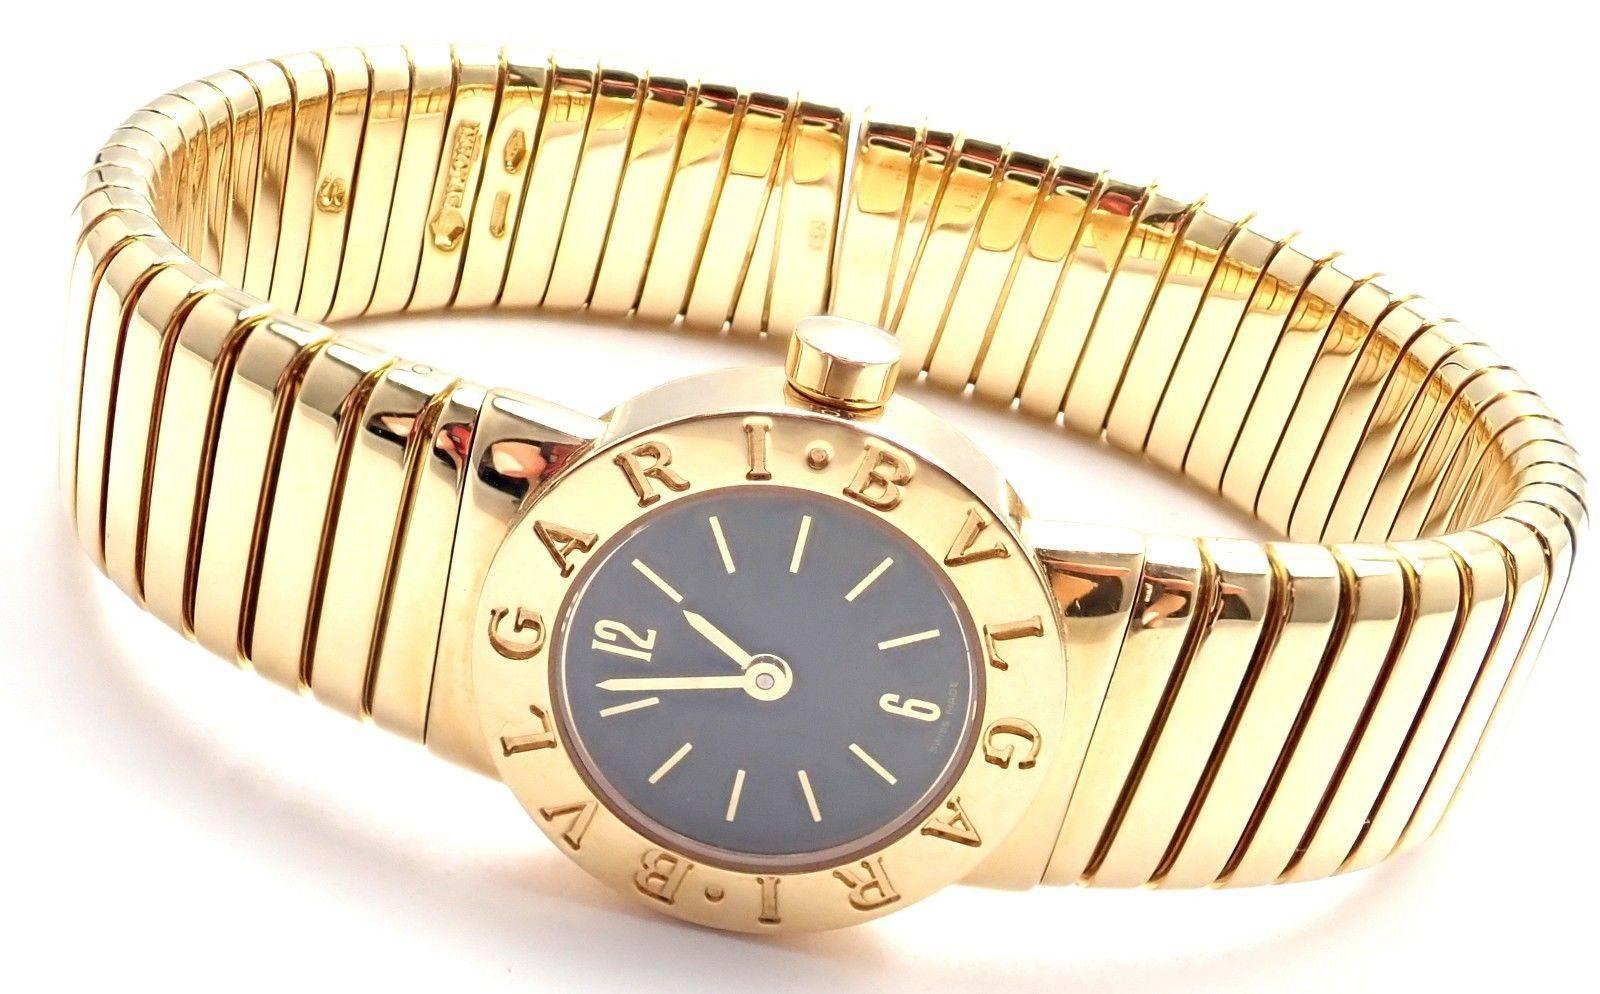 Bulgari lady's 18k yellow gold Tubogas Serpent Snake bracelet watch. 
Details:
Model: BB192T
Movement Type: Quartz
Case Size: 3/4